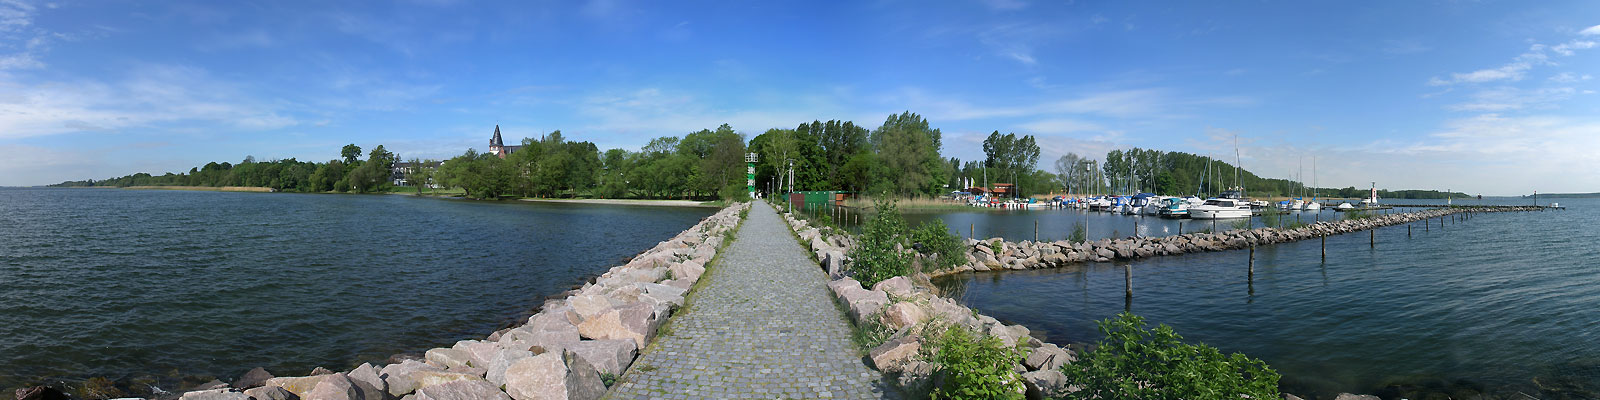 Panorama-Motiv: Klink Hafen - Motivnummer: see-mue-02